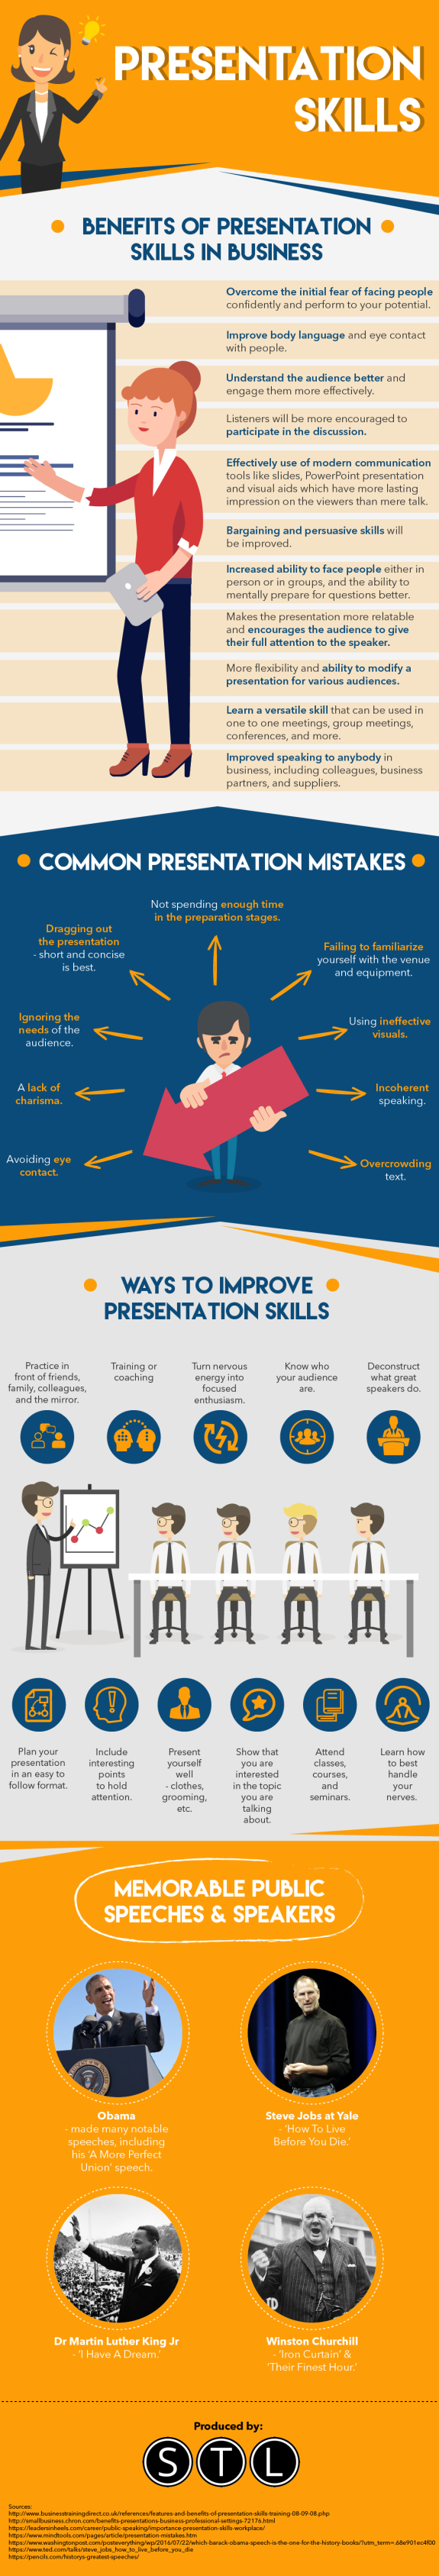 Benefits of Presentation Skills in Business